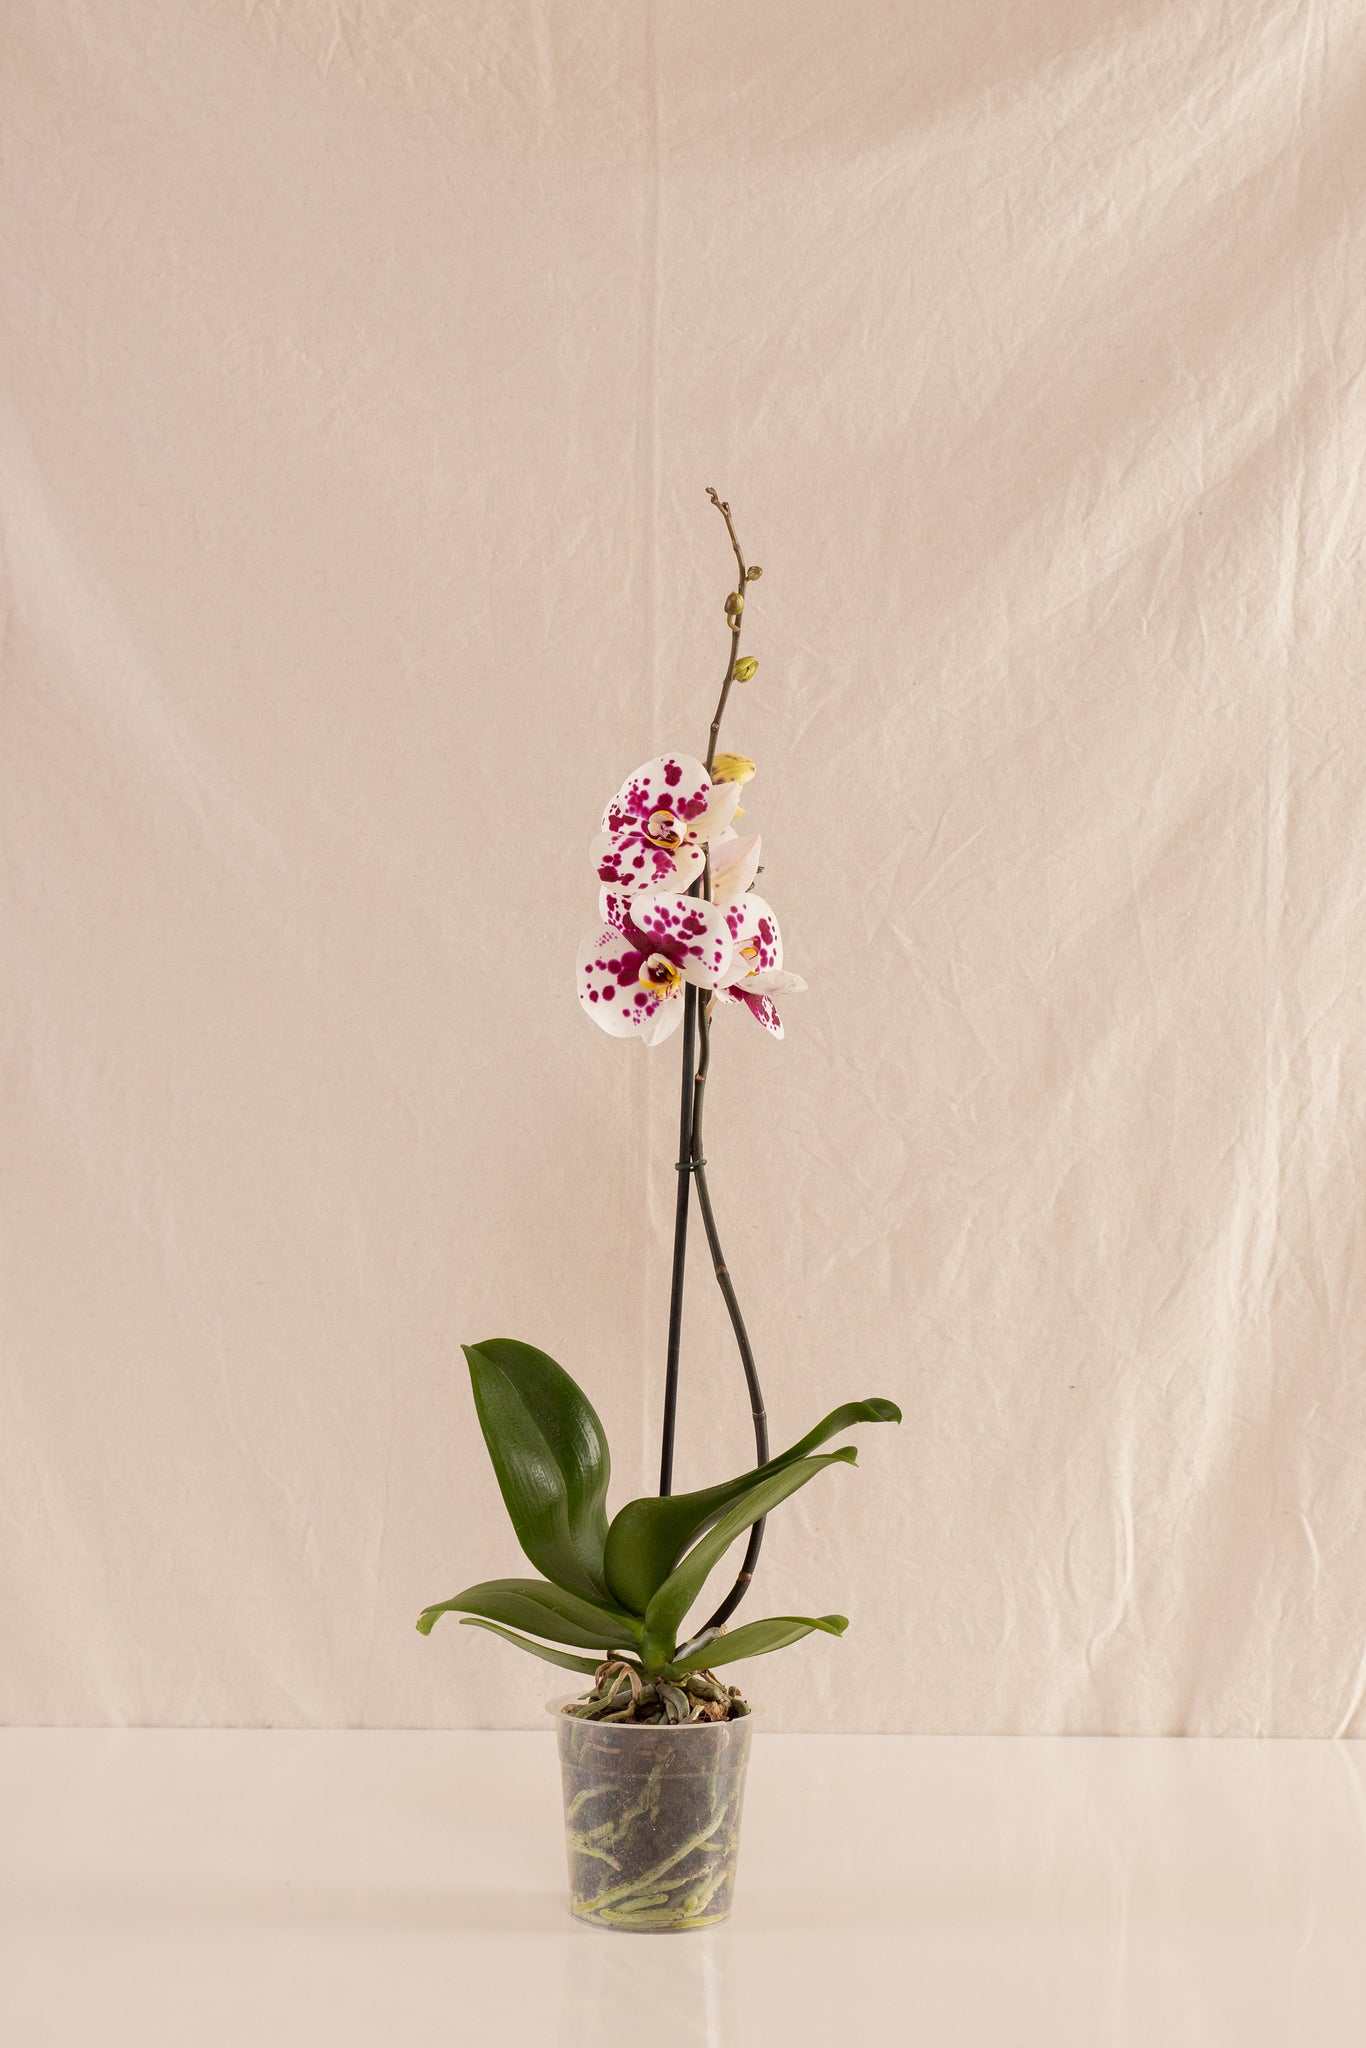 Orquídea Phalaenopsis de 1 Tallo Bicolor Blanca con Puntos Fucsia